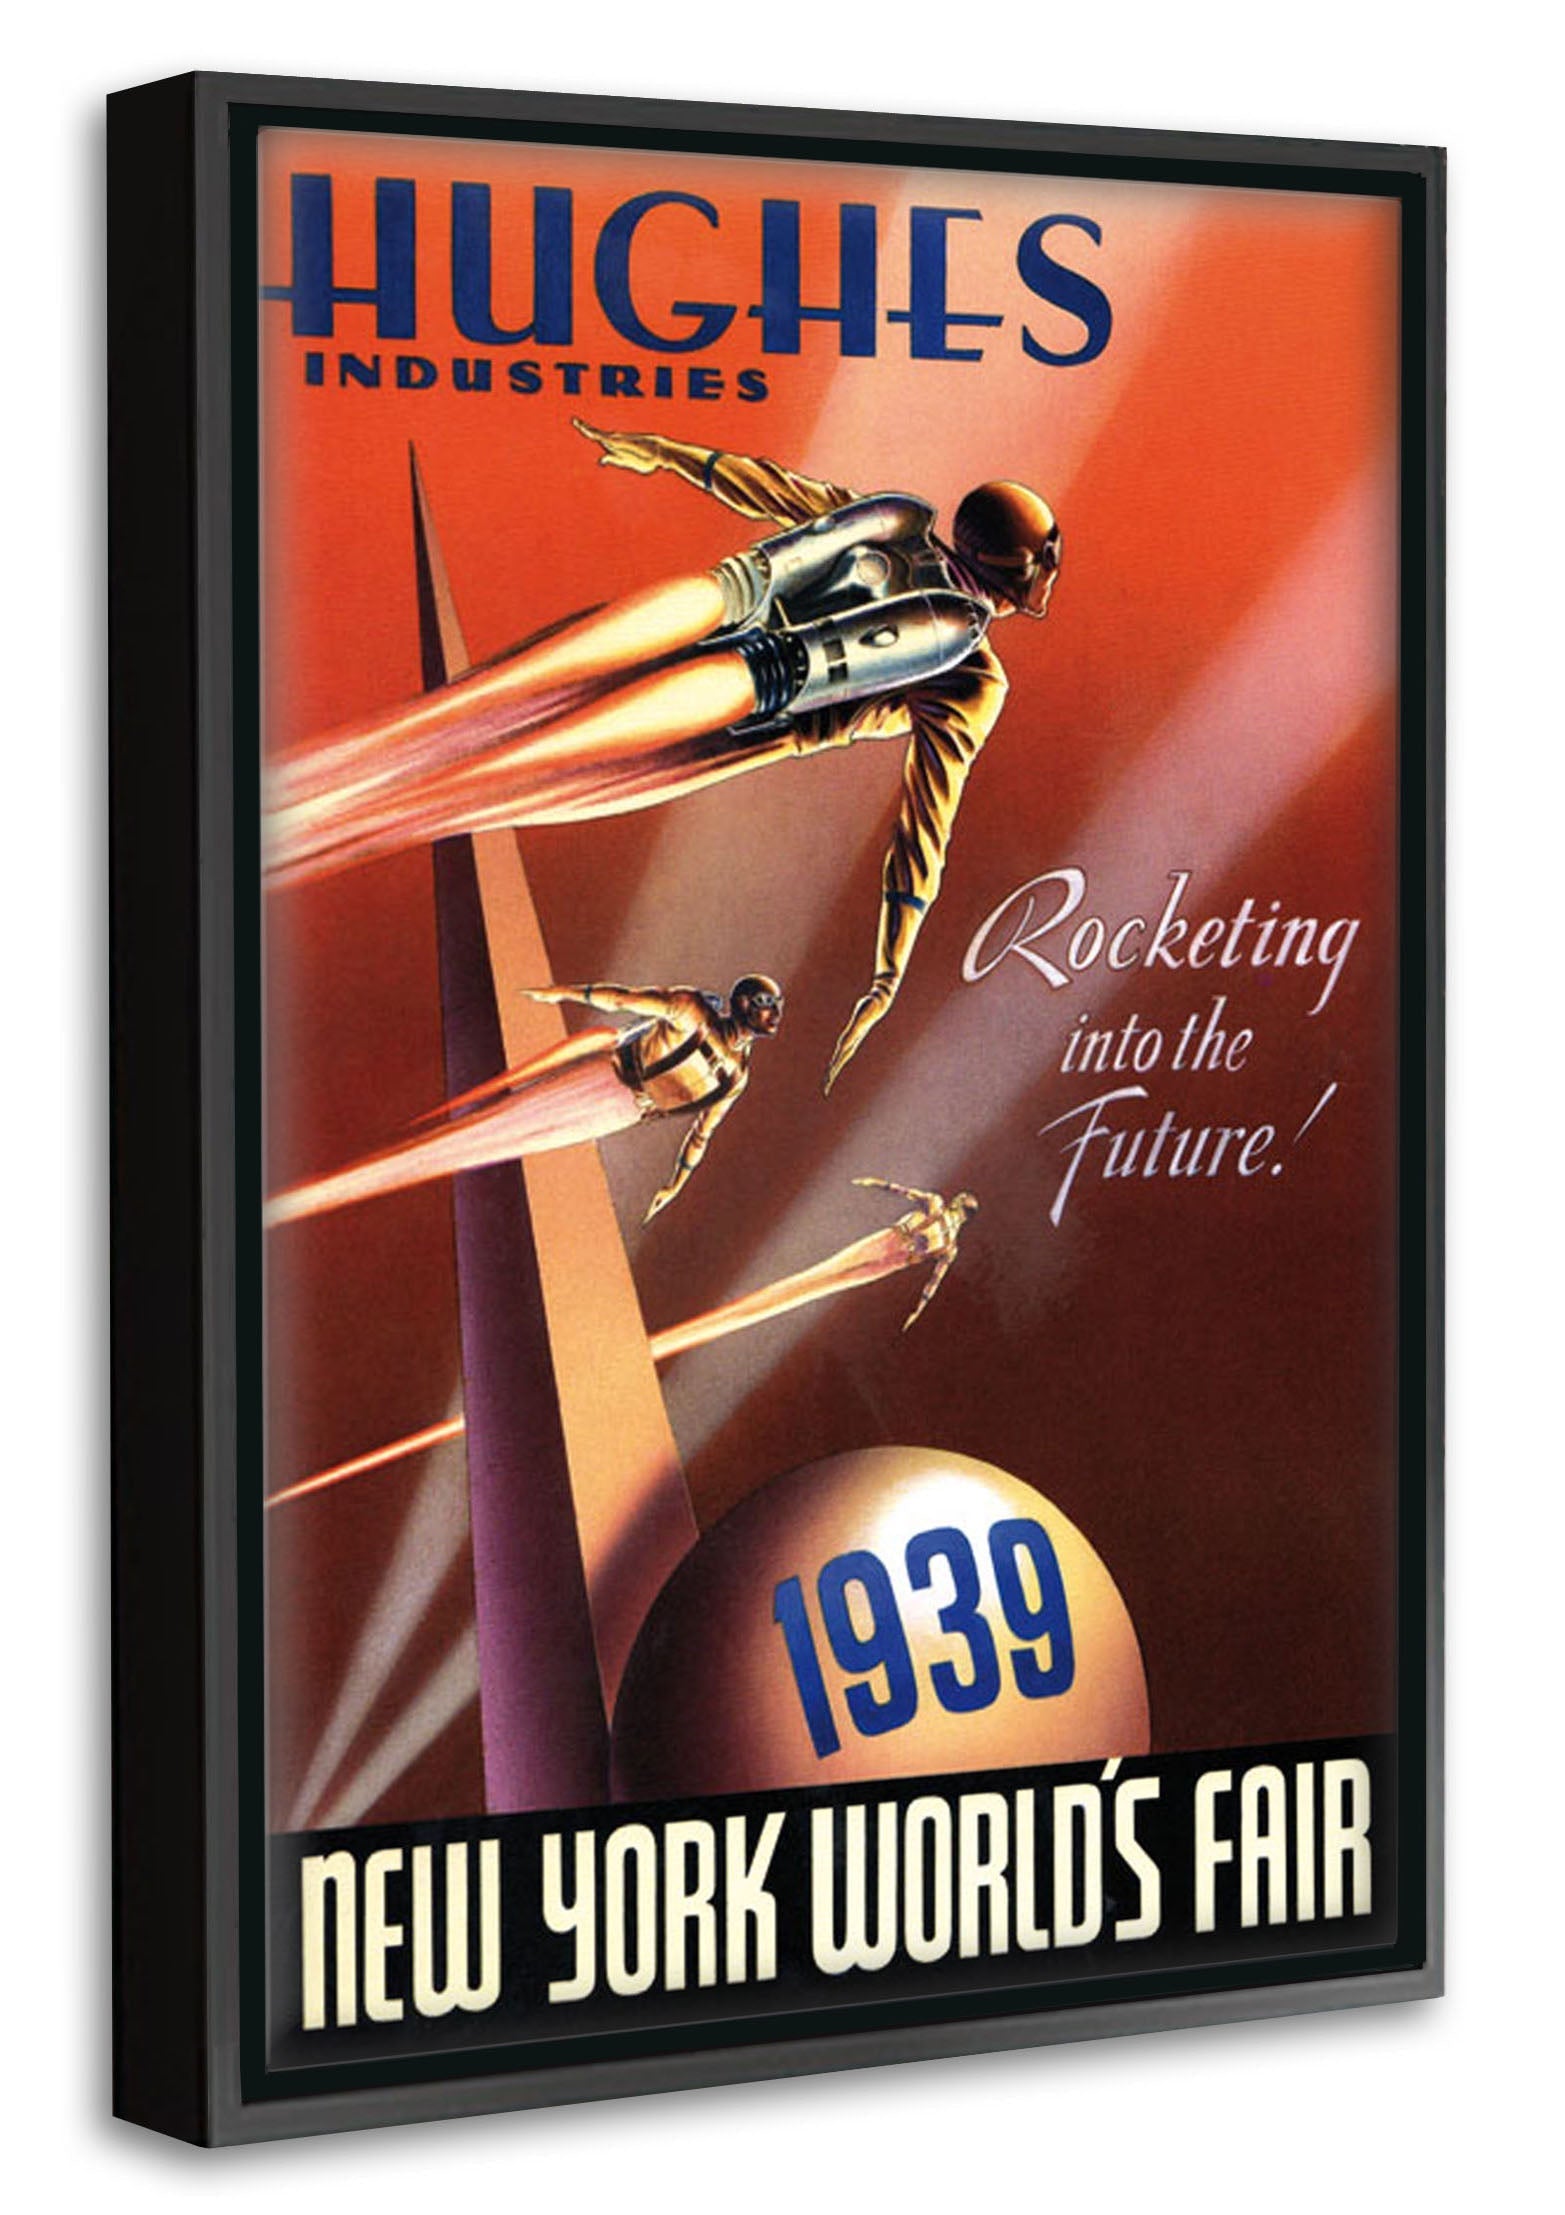 World Fair NEW YORK 1939-expositions, print-Canvas Print with Box Frame-40 x 60 cm-BLUE SHAKER